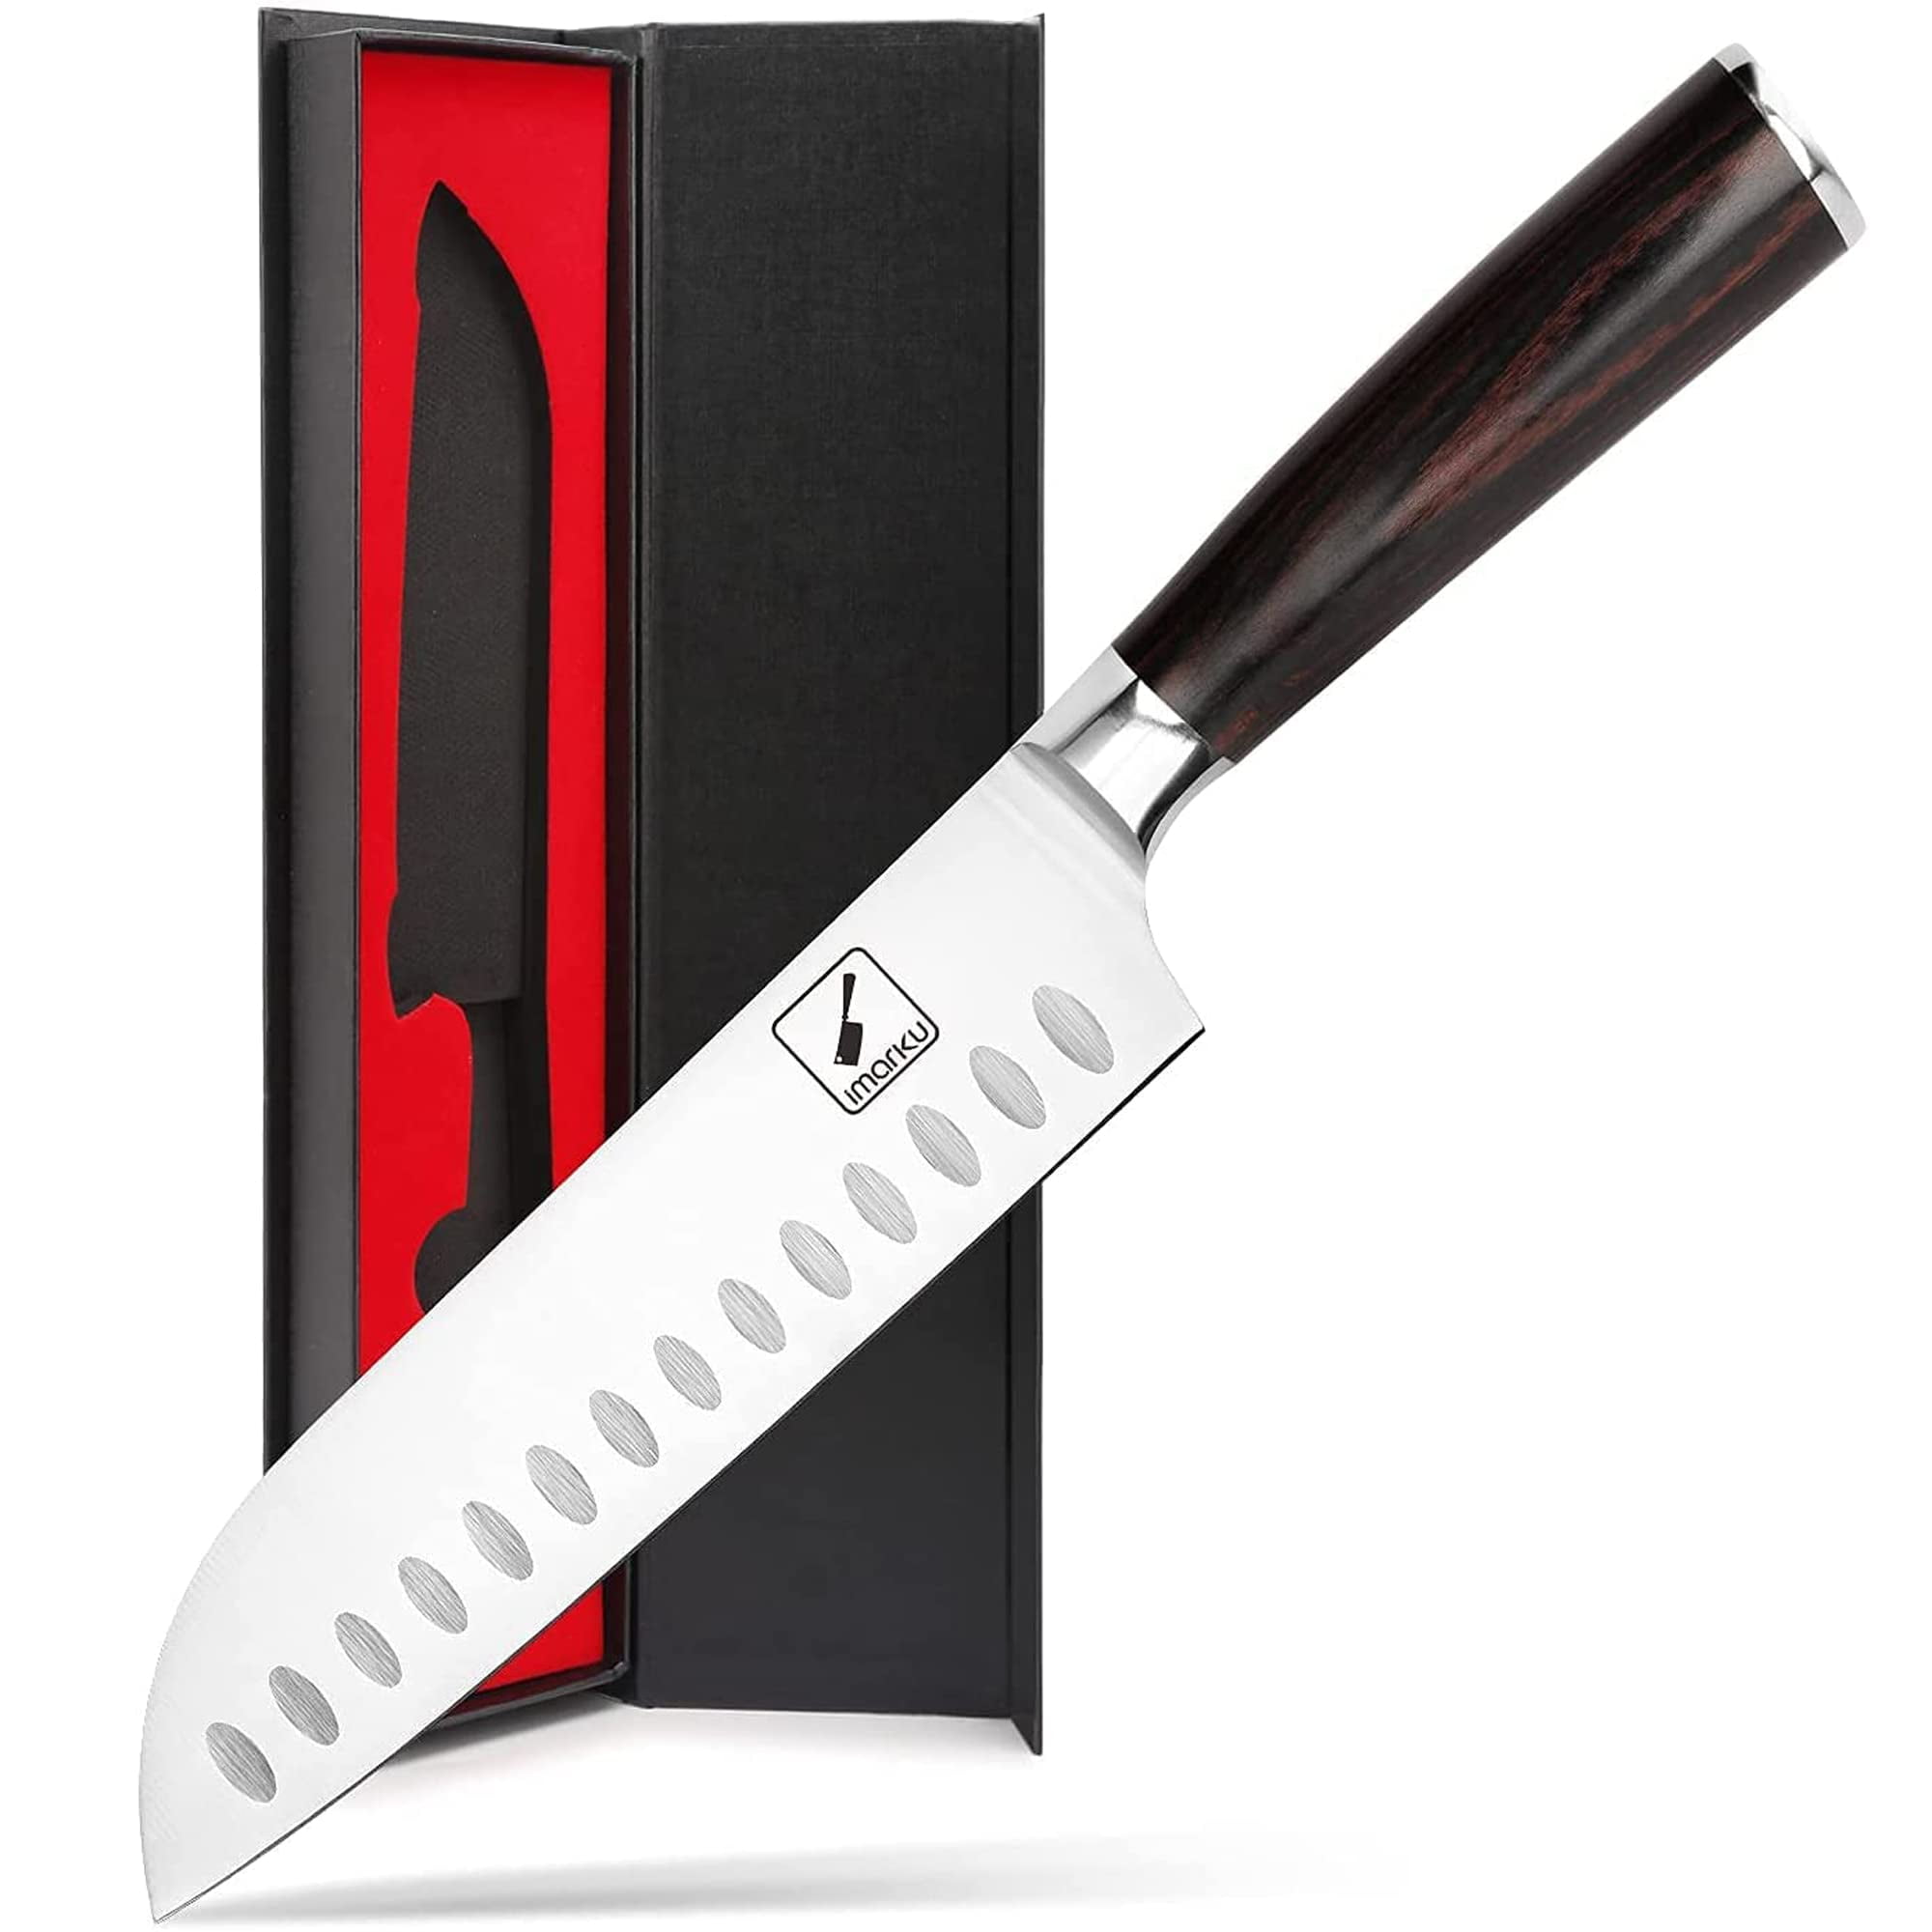 imarku Bundle-3.5 Paring Knife AND 8 Chef's Knife Japanese